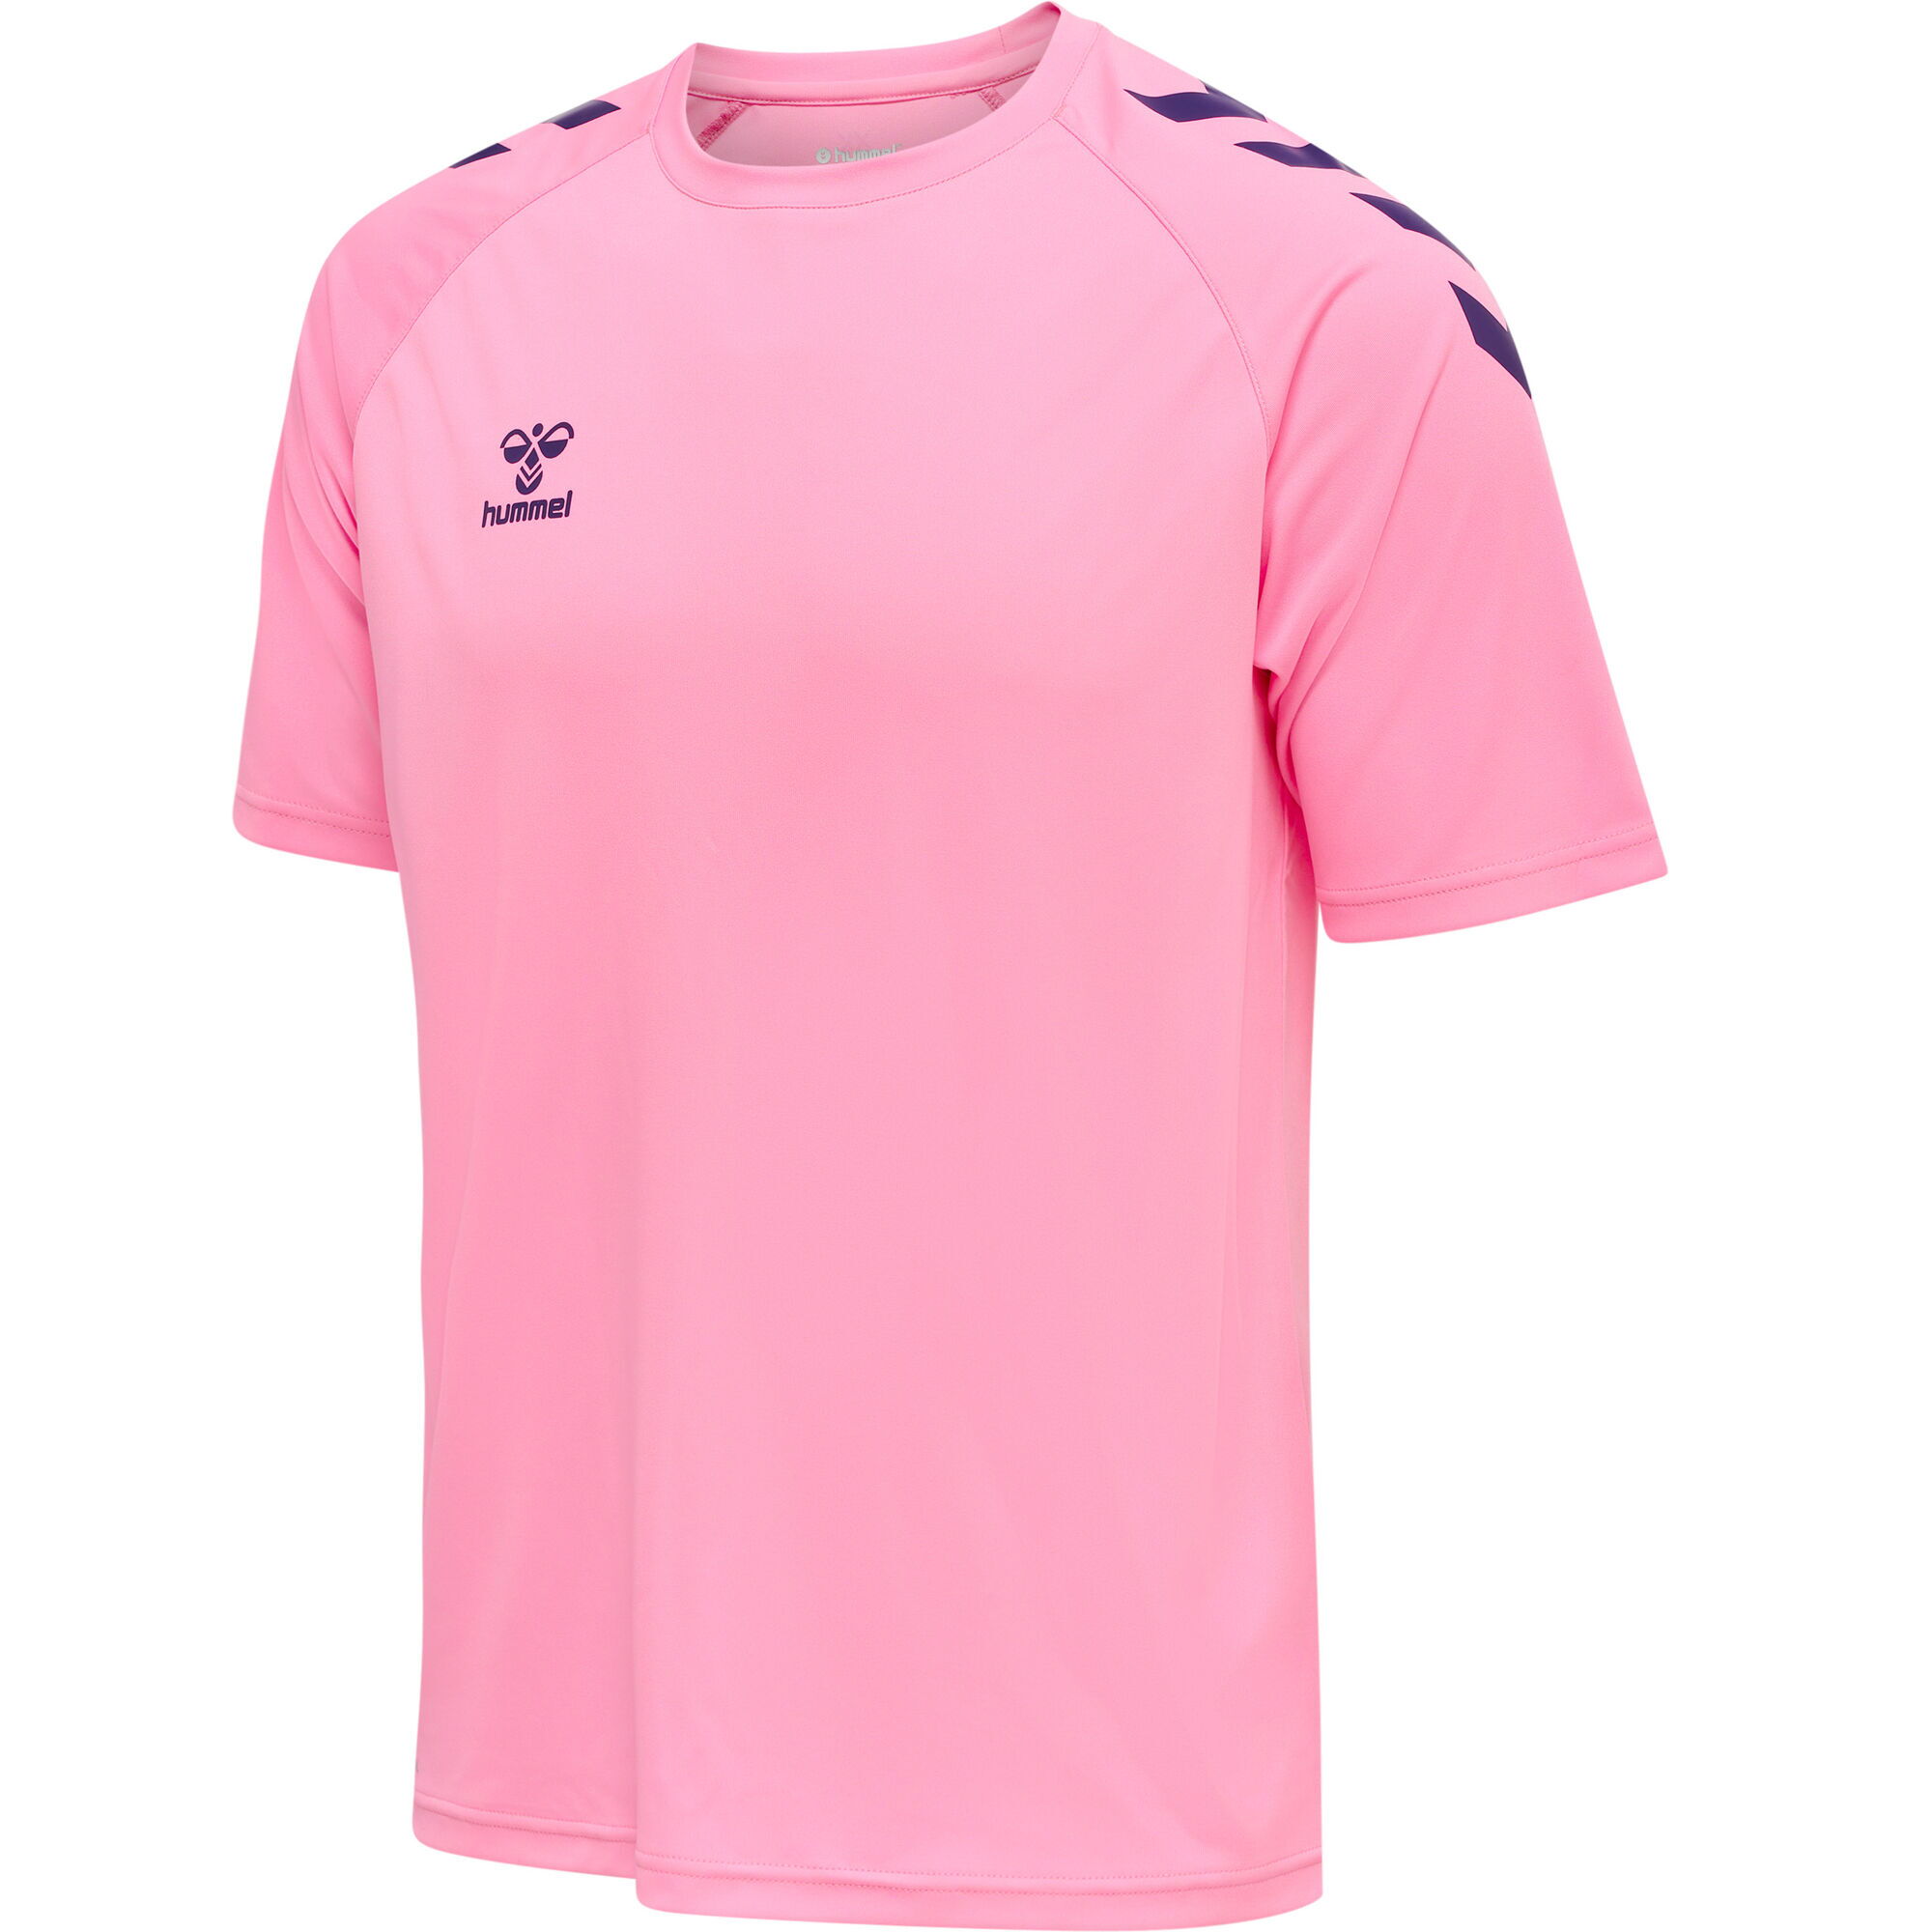 Regnbue Pickering atom Hummel Core XK T-shirt Børn - Pink/lilla